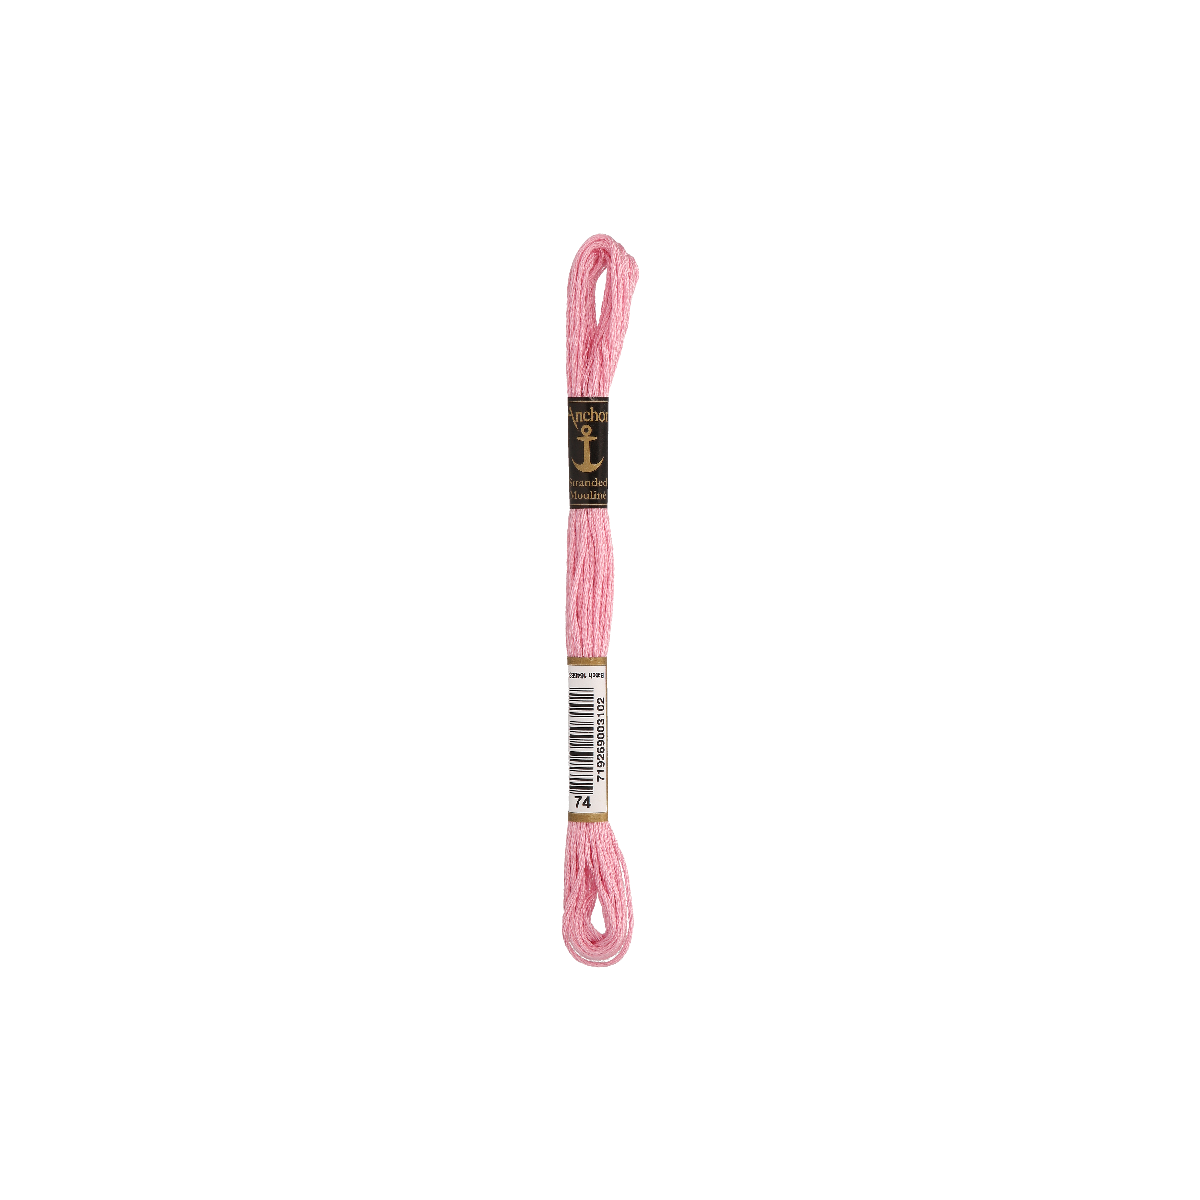 Anchor 8m, pastel roze, katoen, kleur 74, 6 draden